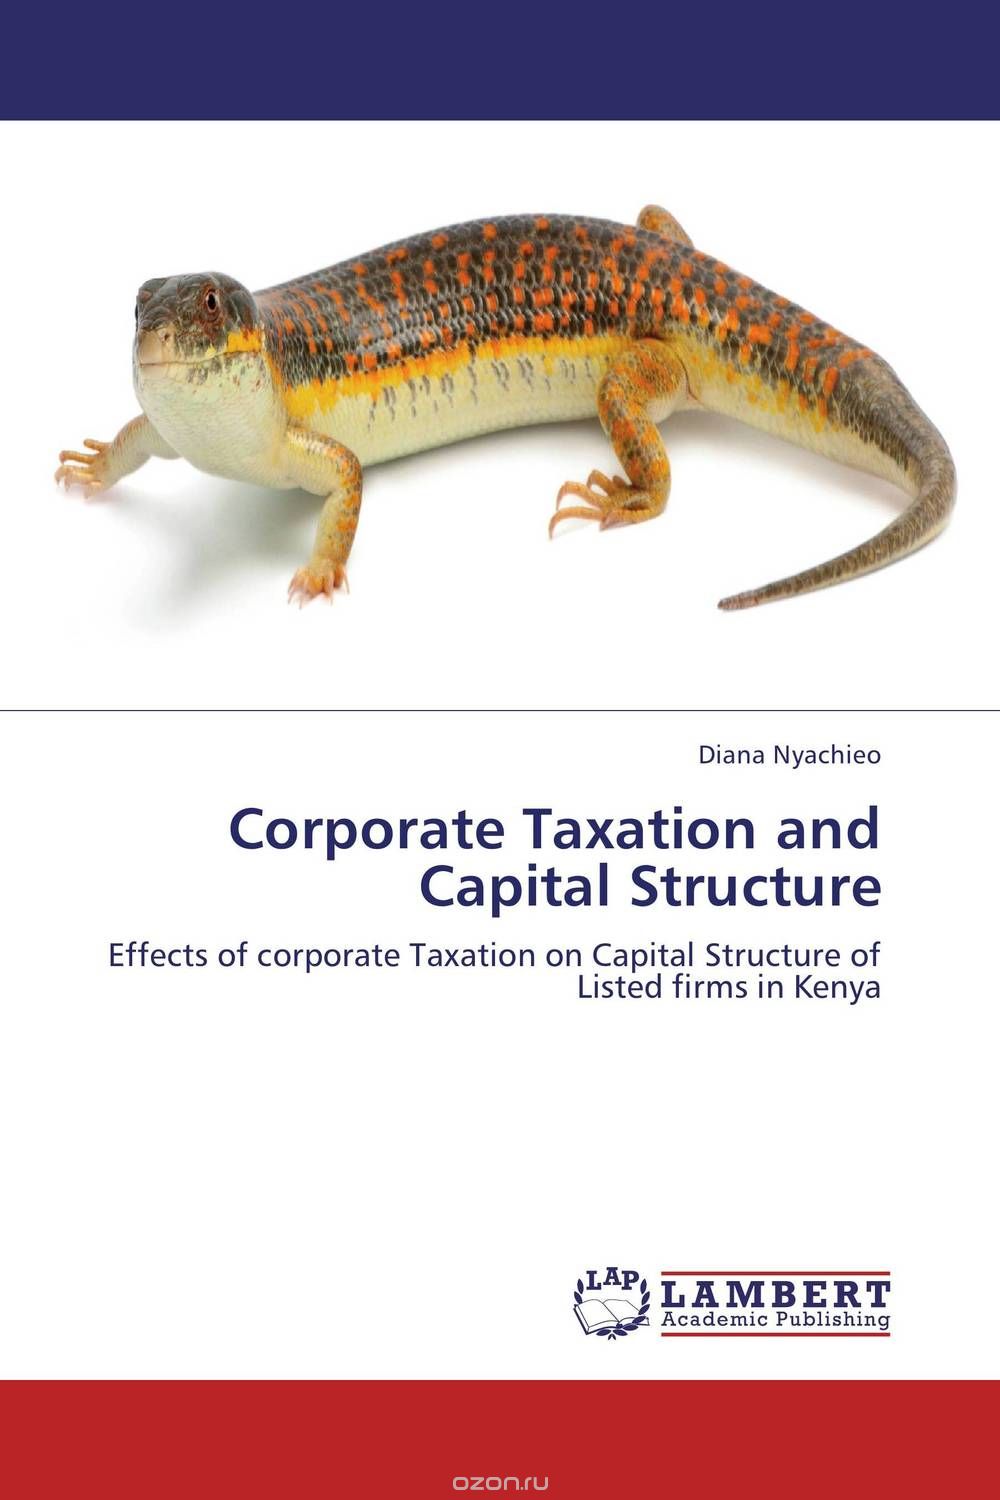 Скачать книгу "Corporate Taxation and Capital Structure"